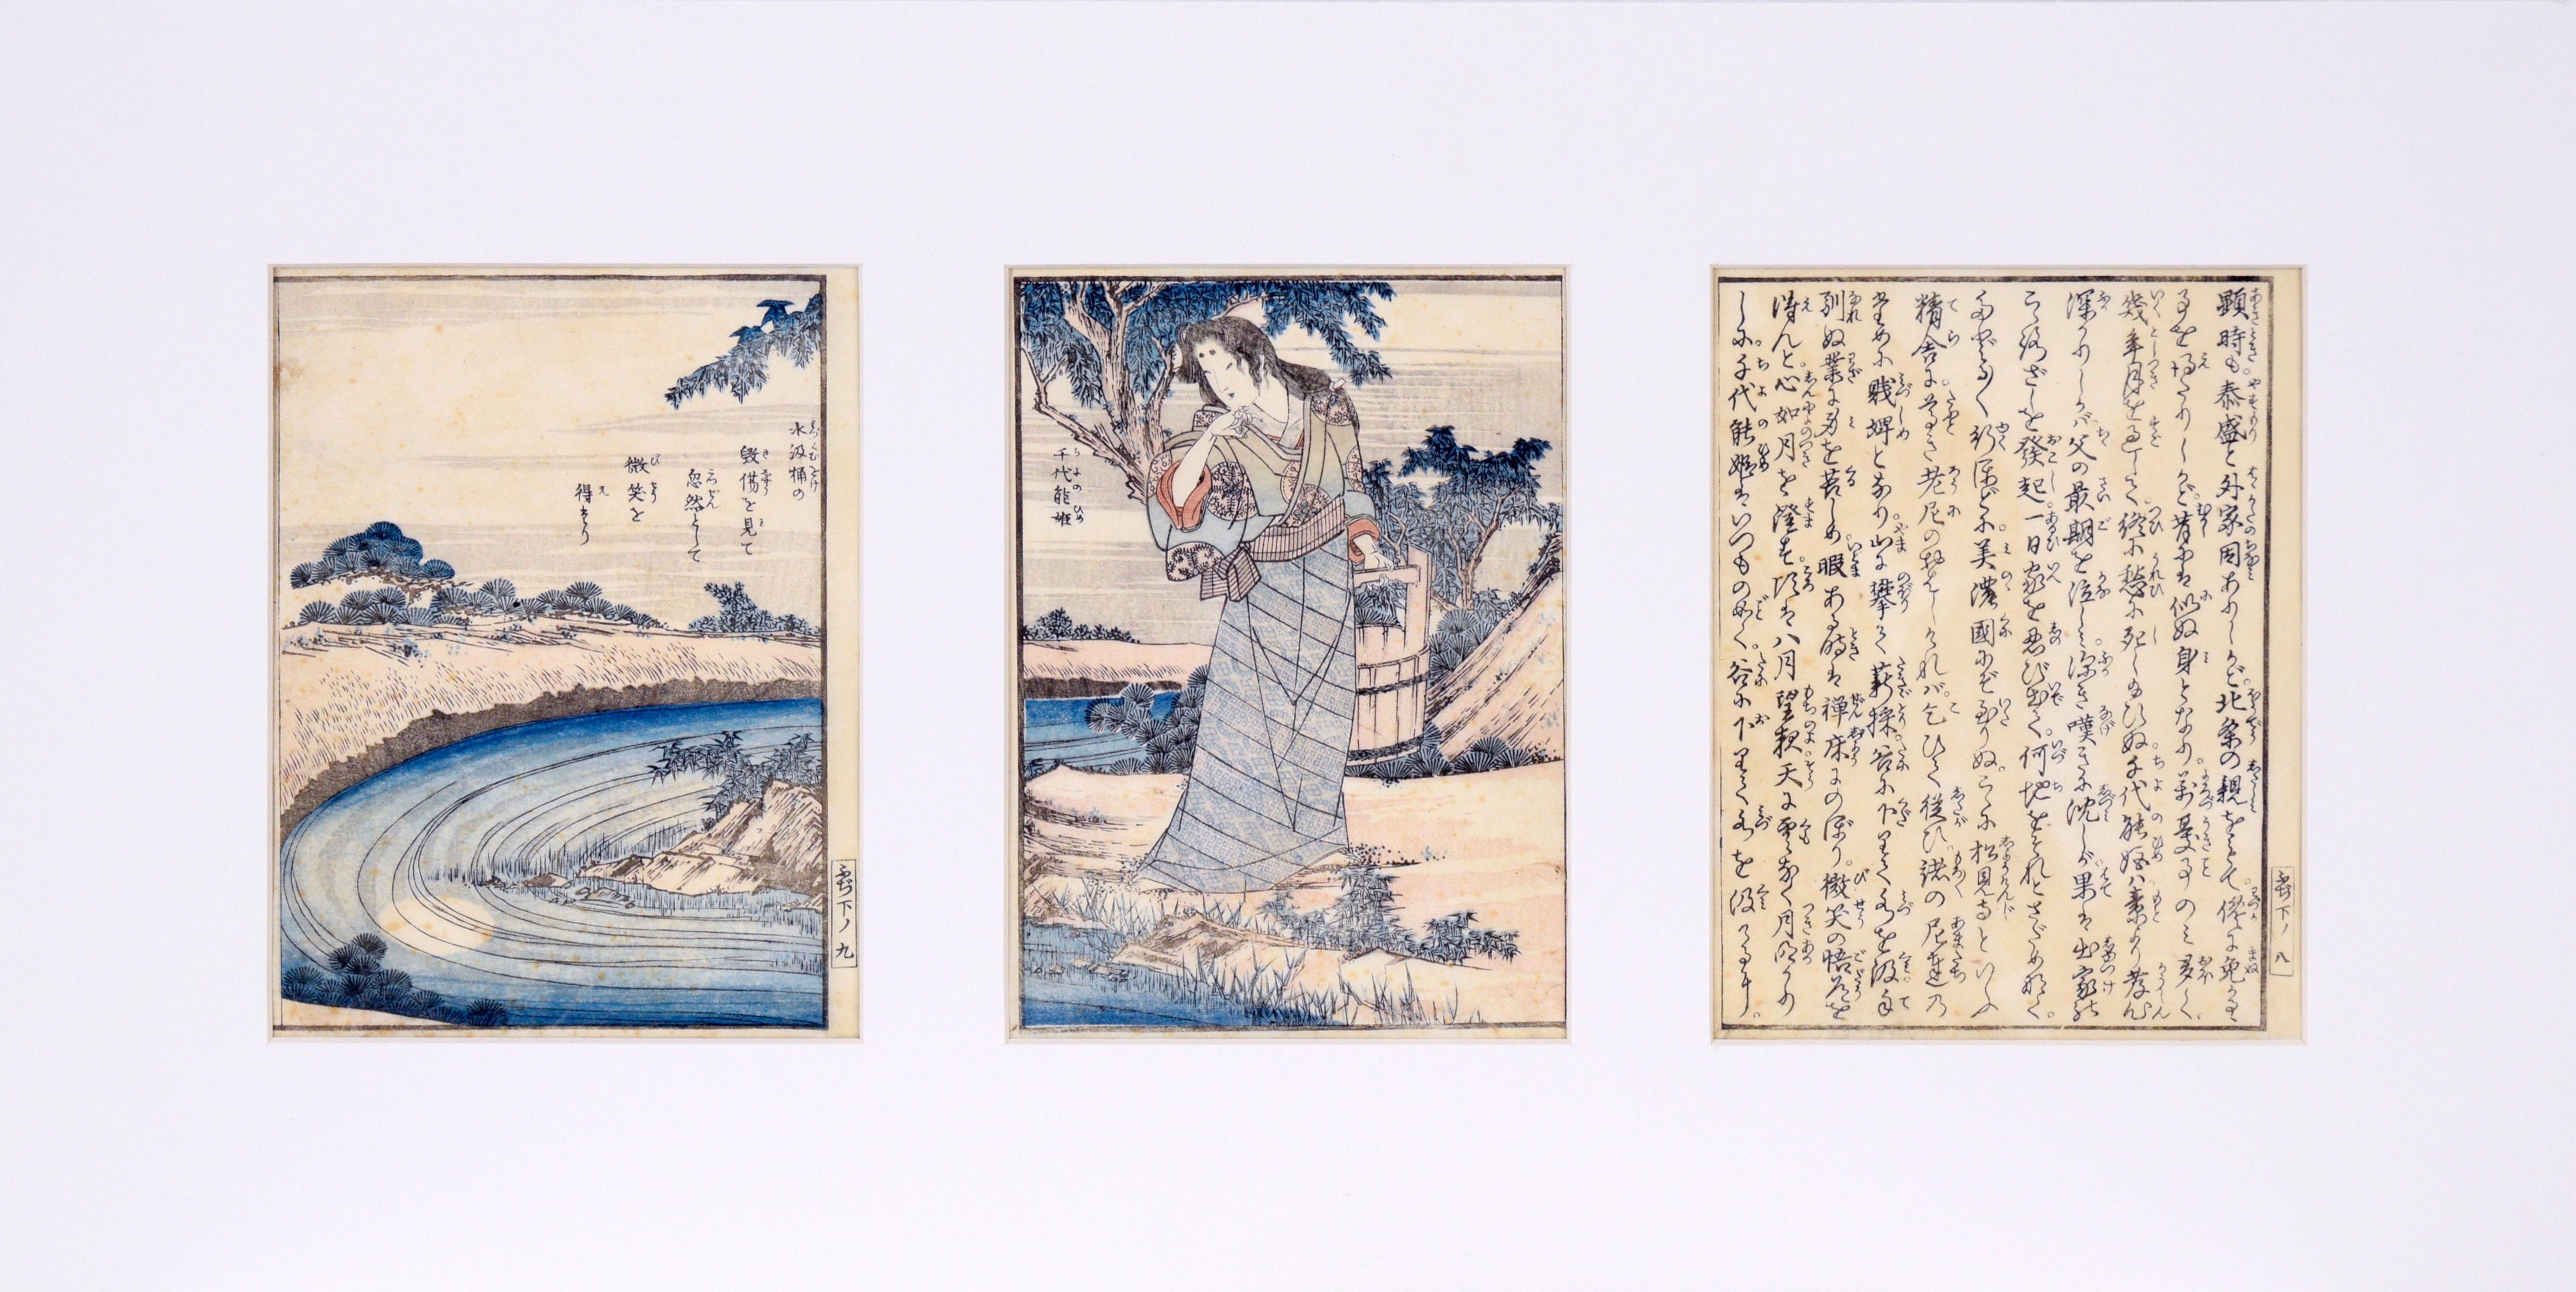 Keisei Eisen Landscape Print - 3 Panel Hand Colored Japanese Woodcut Print Lithograph